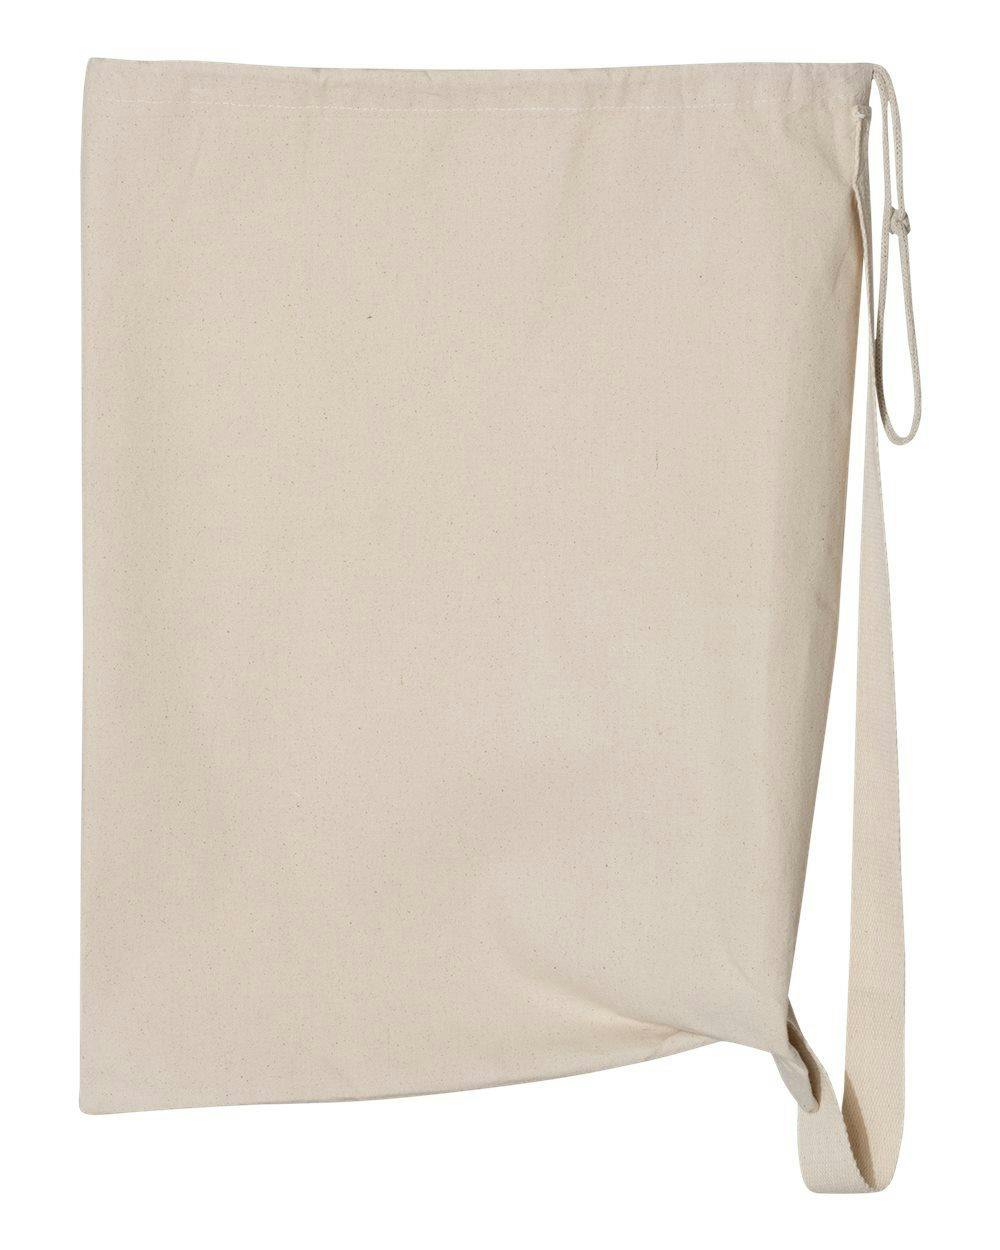 Image for Medium Laundry Bag - OAD109